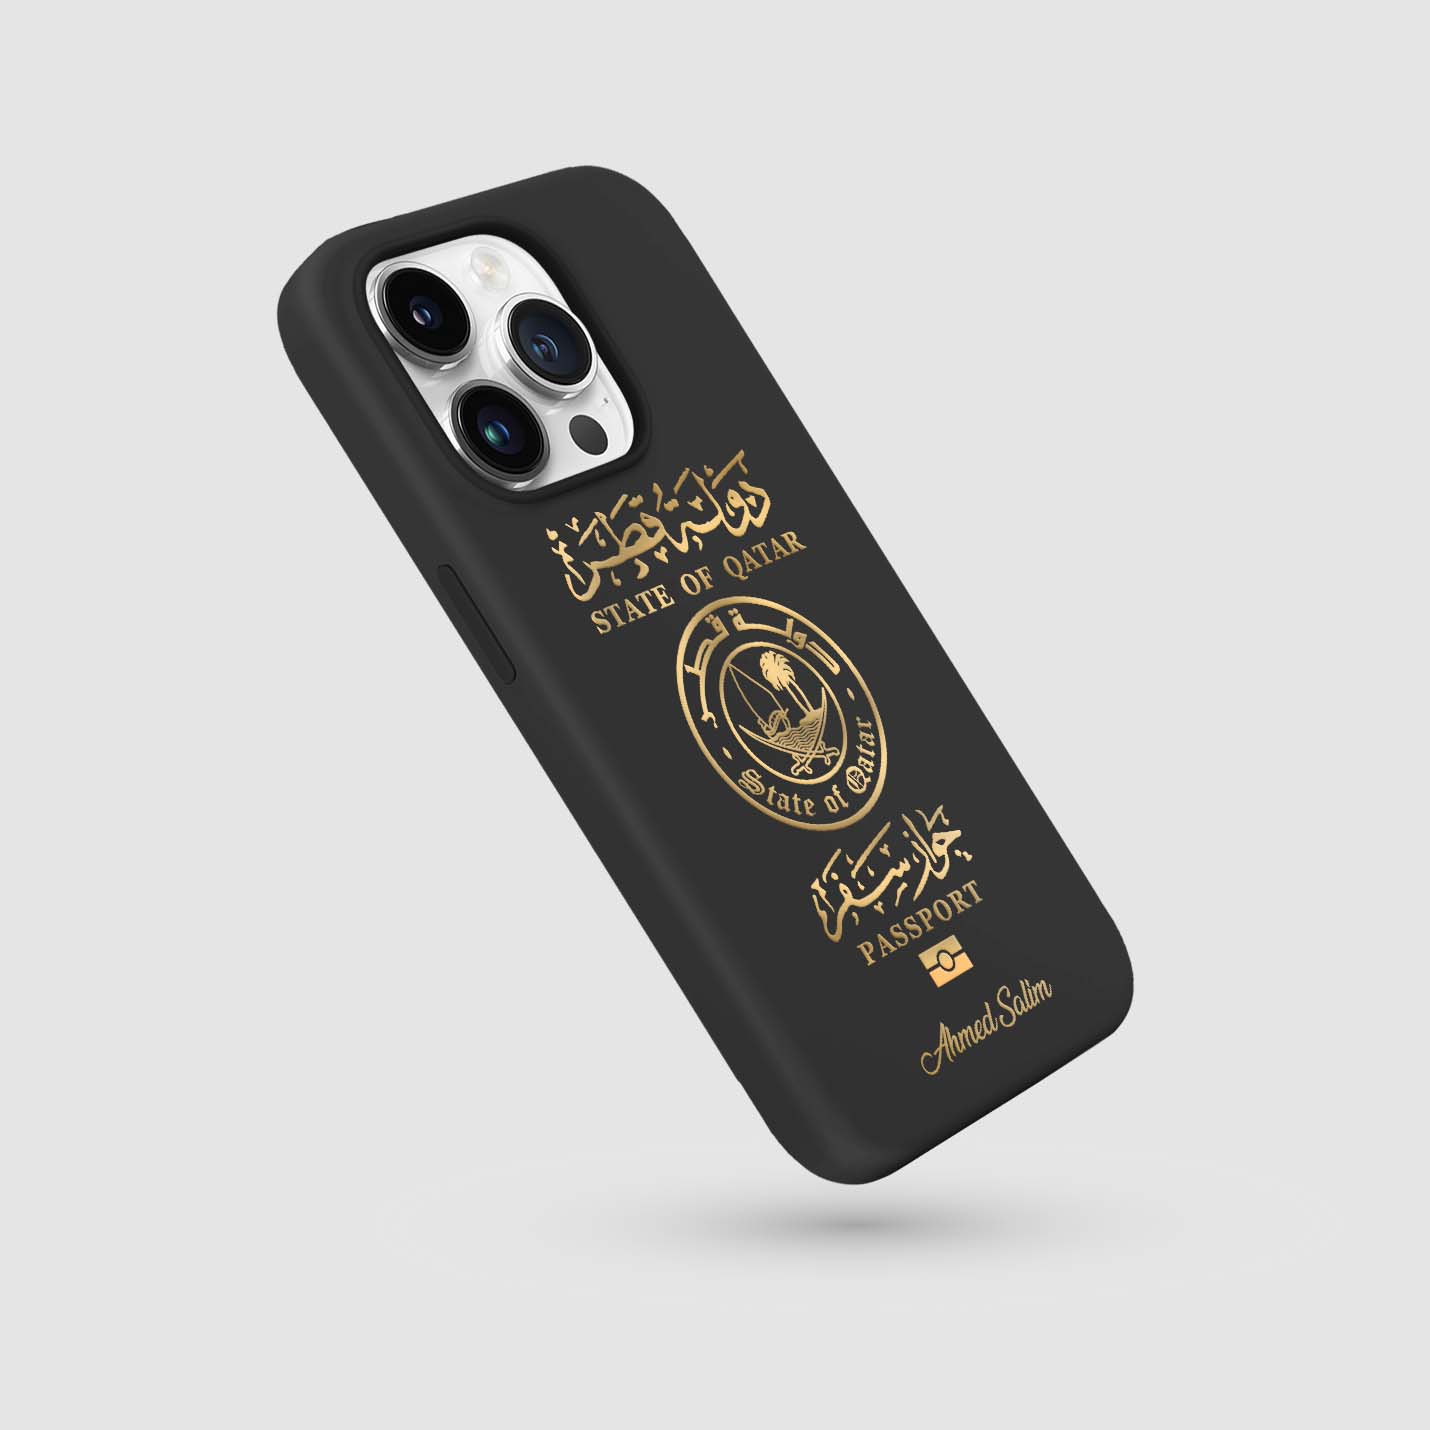 Handyhüllen mit Reisepass - Katar - 1instaphone